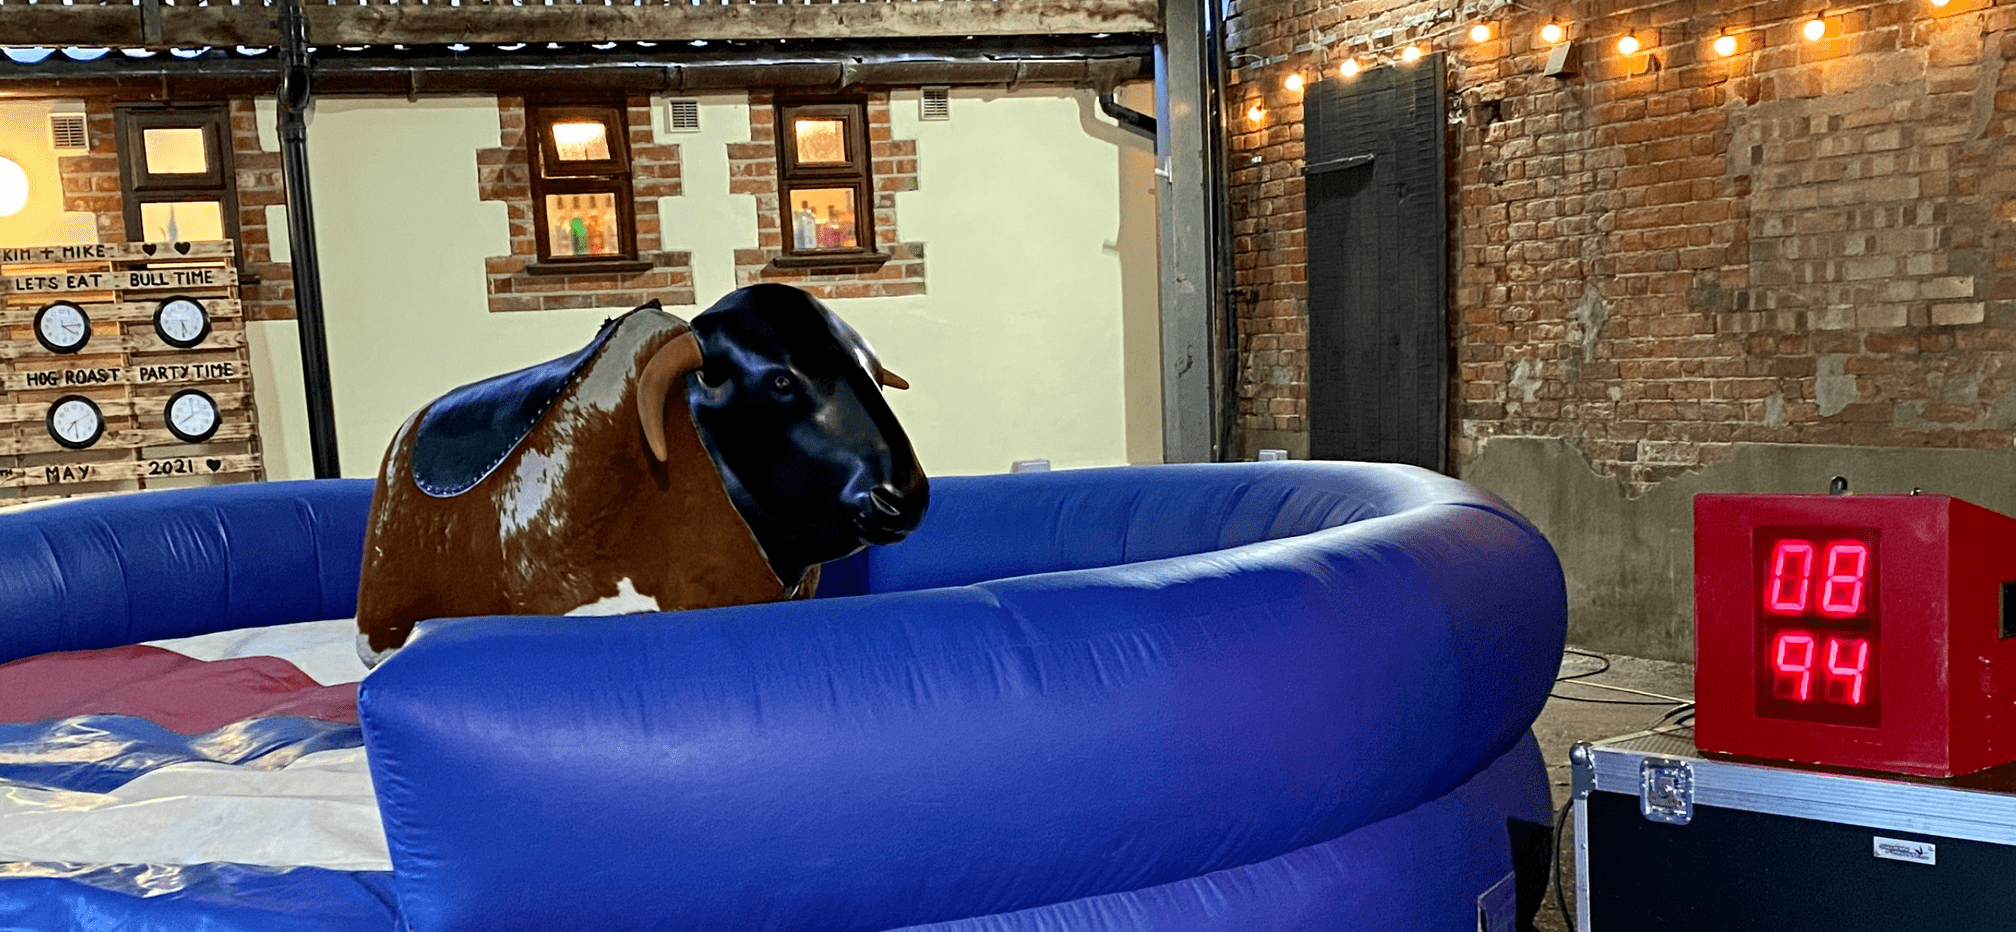 Rodeo bull at the dairy barns Norfolk 